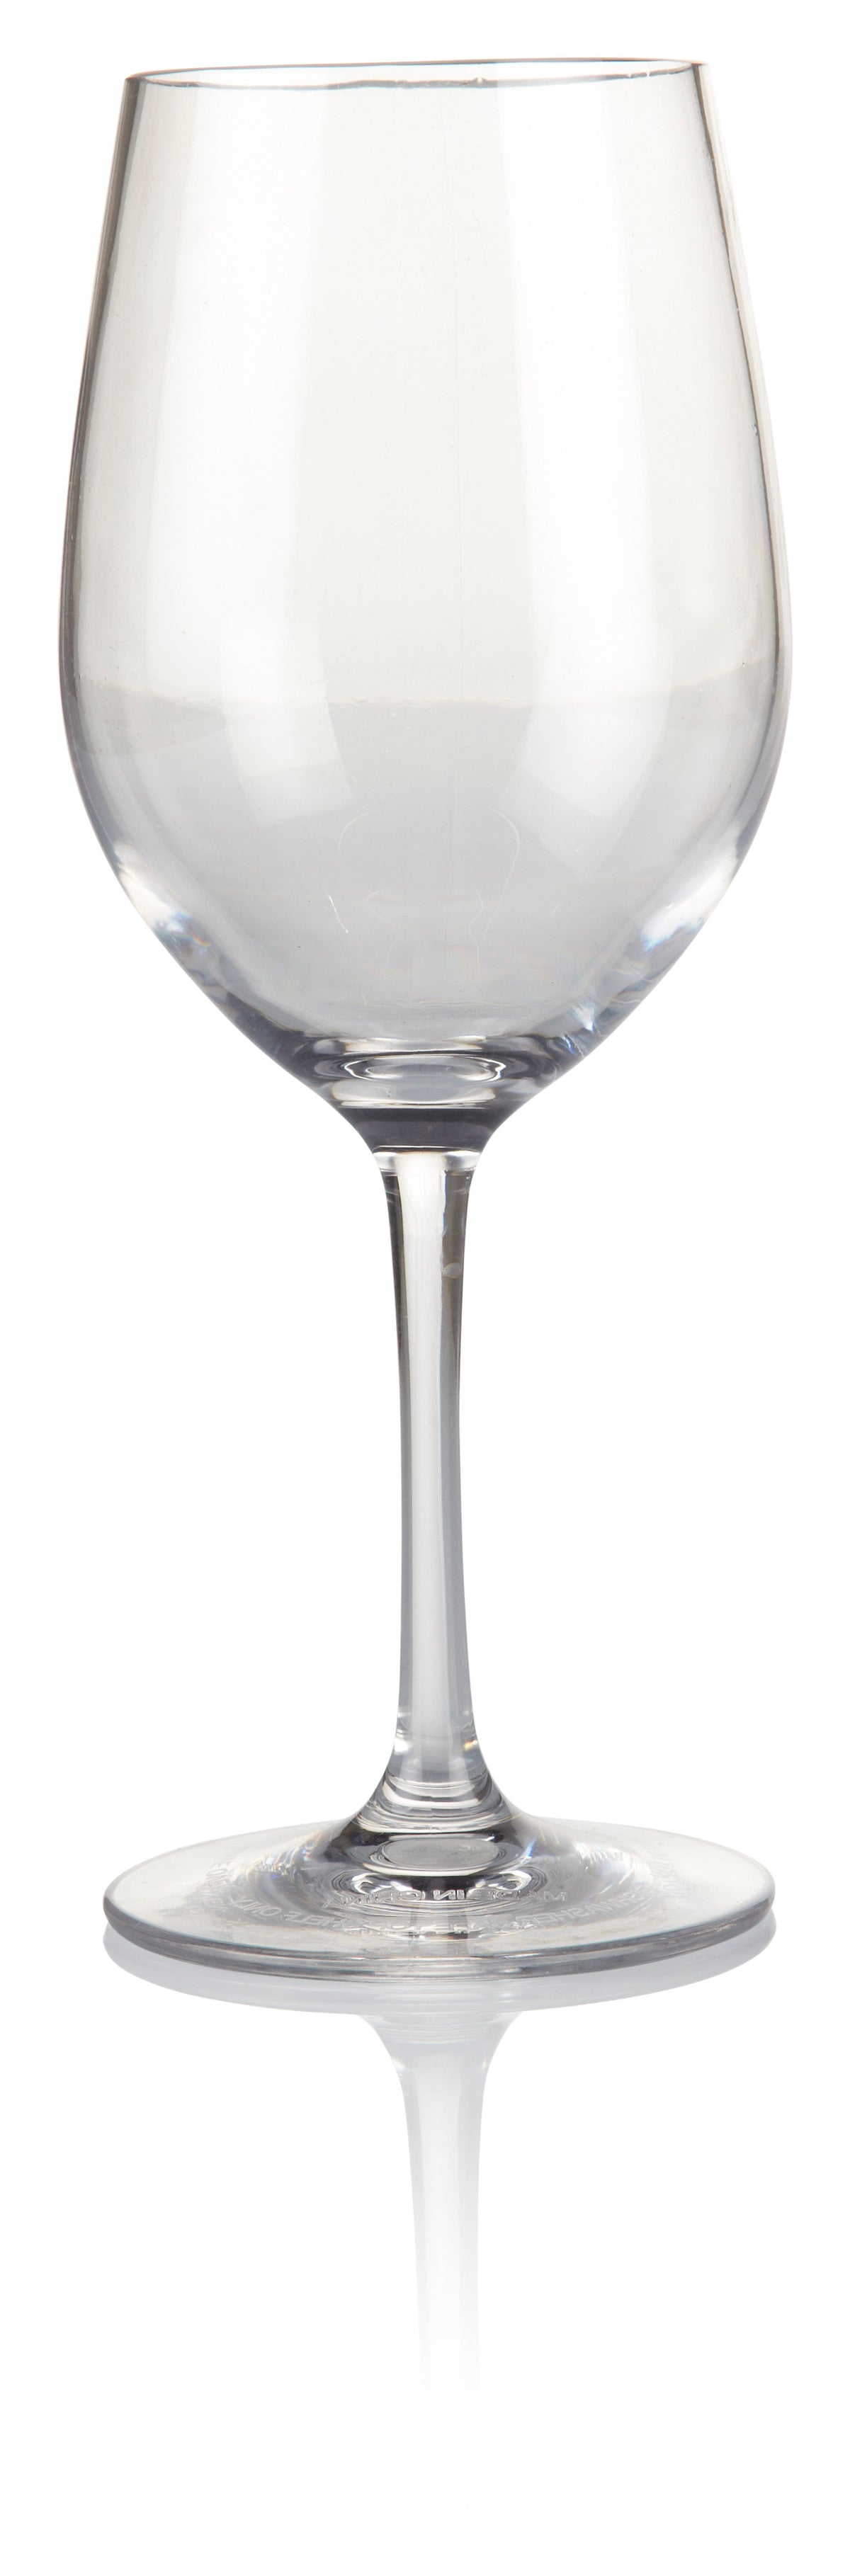 Unbreakable Wine glass - Alzheimer's Society